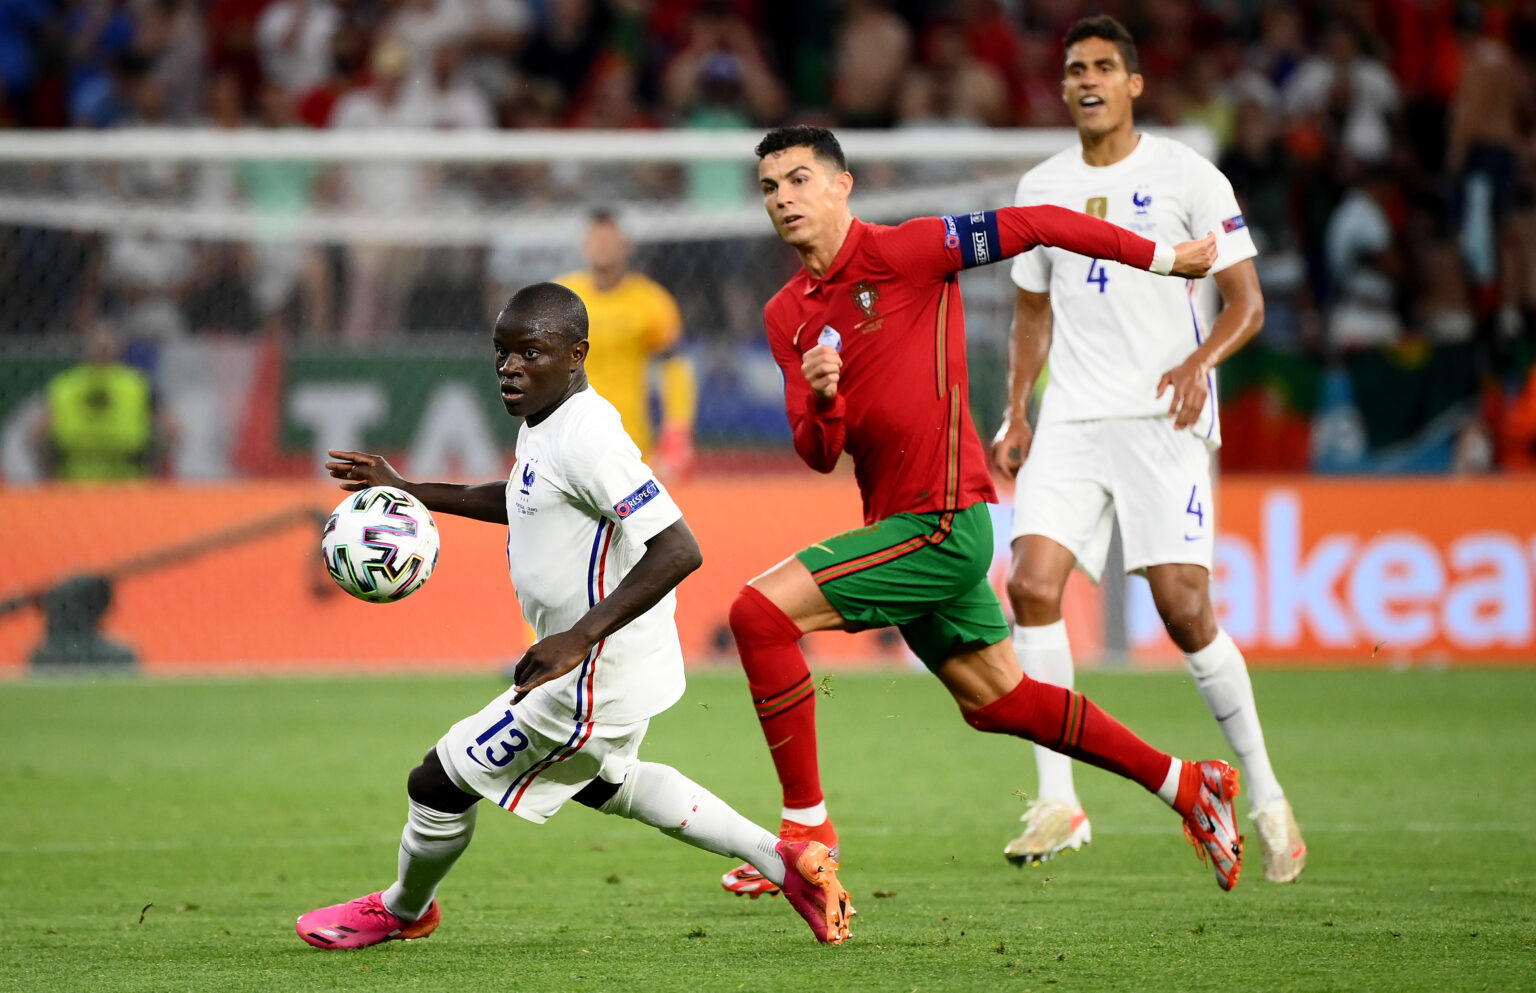 UEFA EURO 2020: Portugal vs France Full Match Highlights